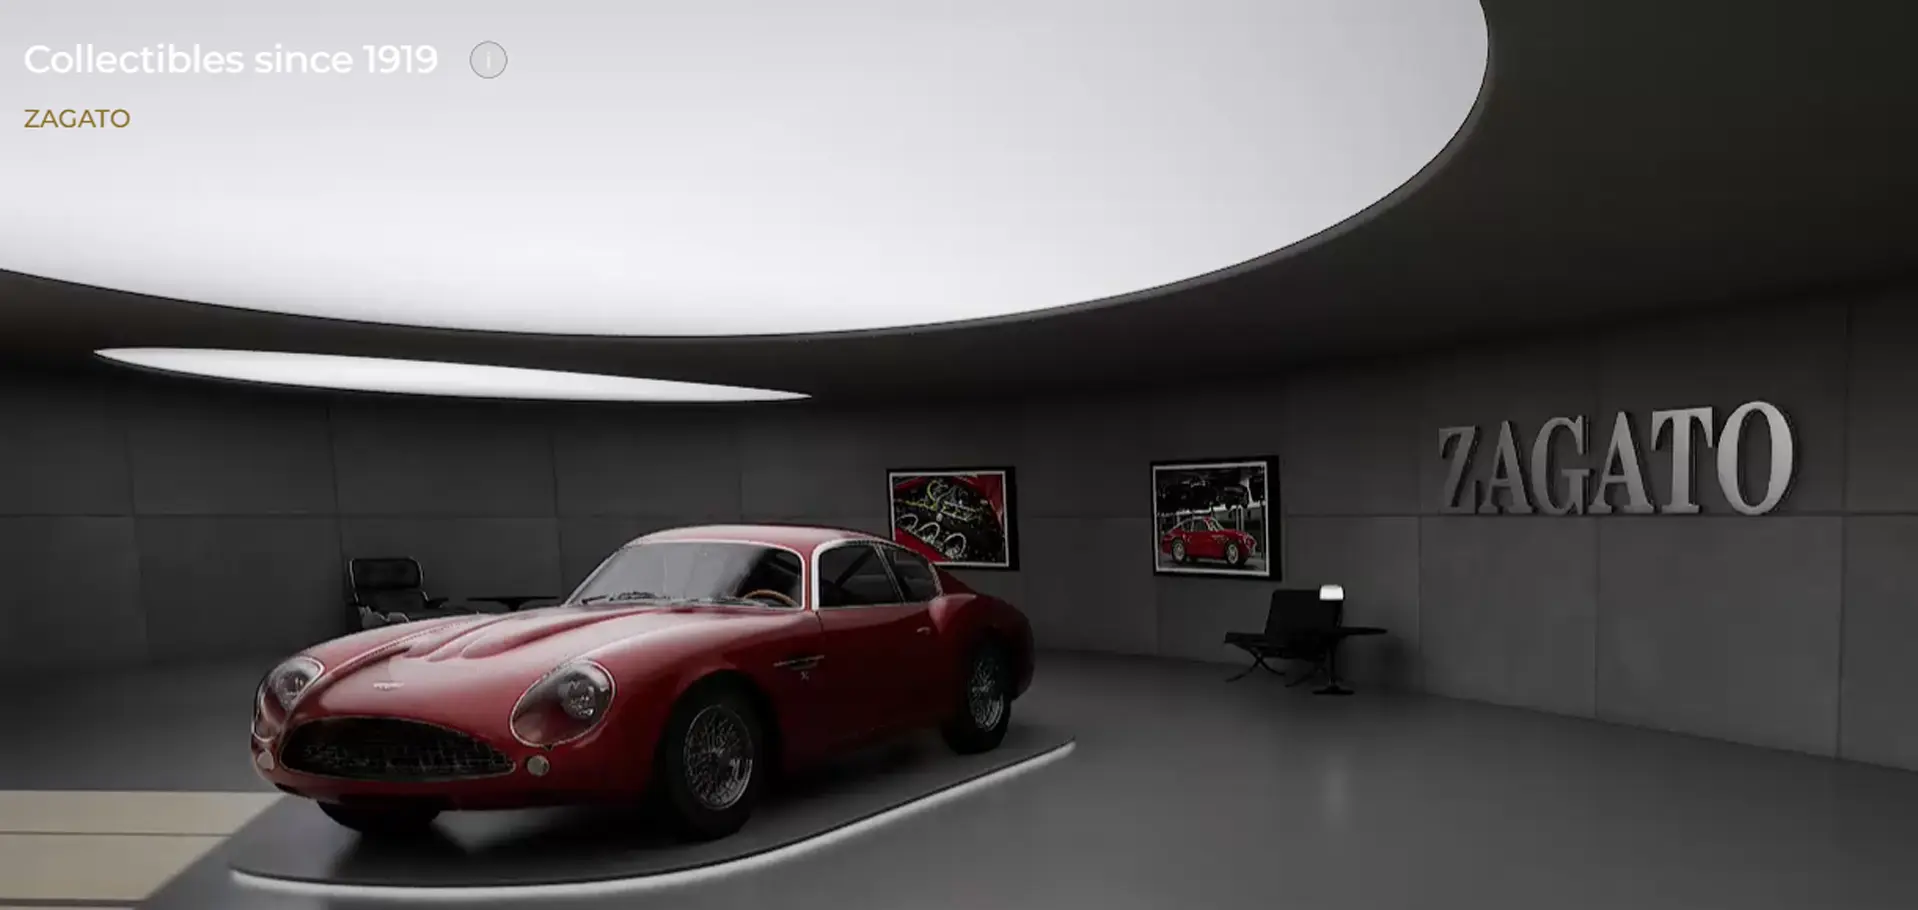 Explore why Zagato is so special in Roarington’s virtual showroom